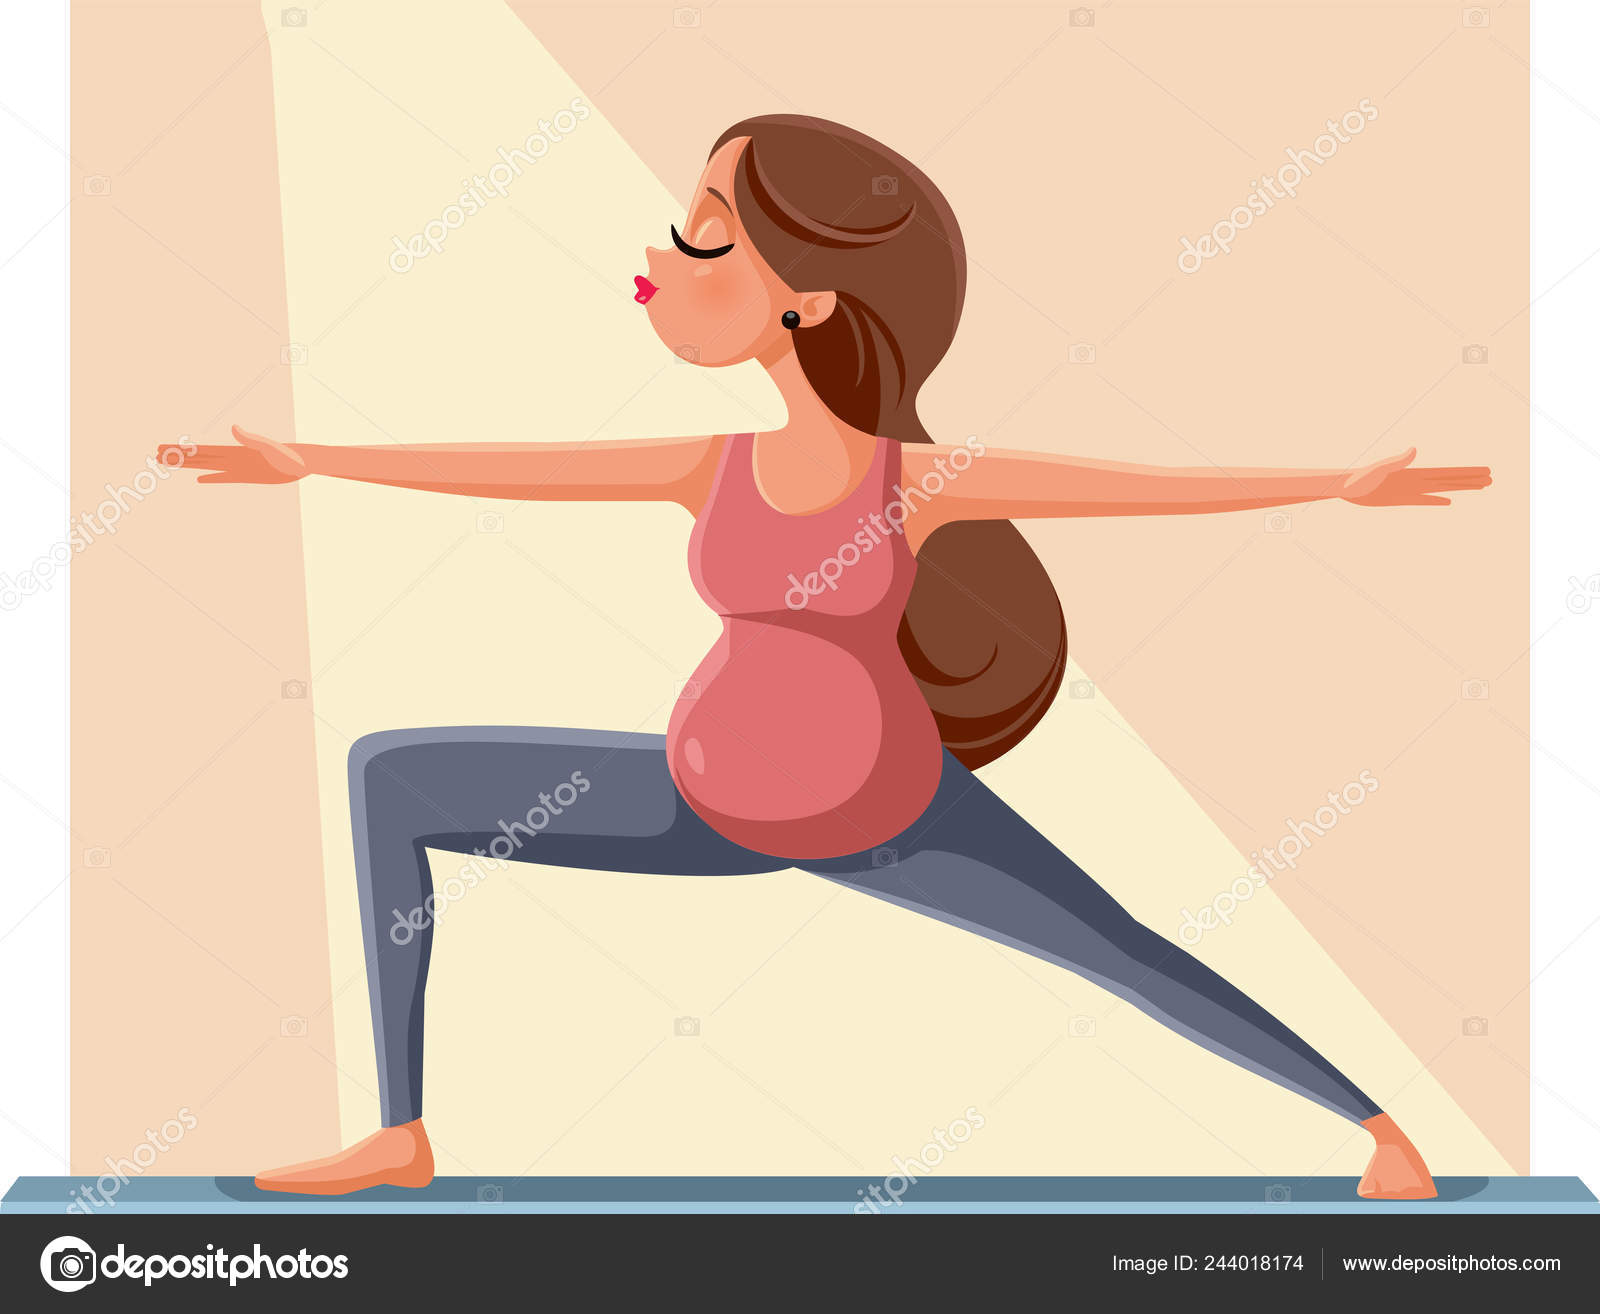 Prenatal yoga Vector Art Stock Images | Depositphotos